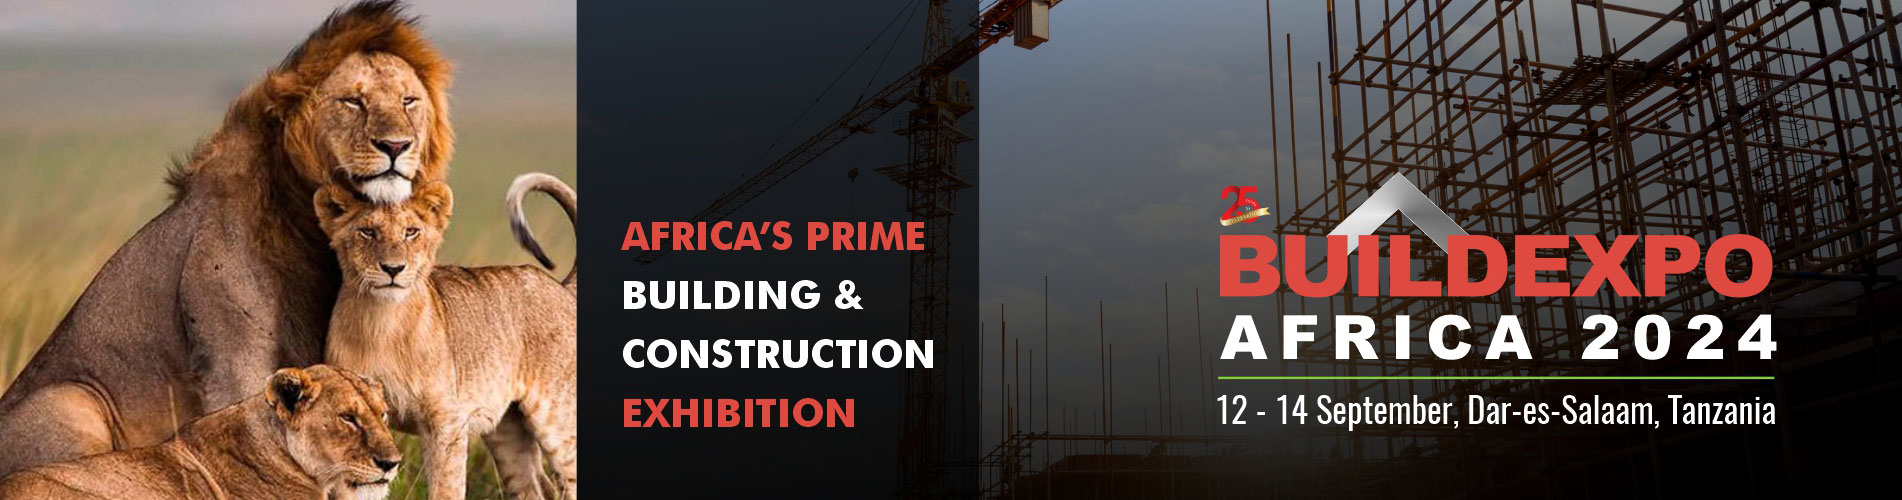 Buildexpo Tanzania 2024 - International BUILDING & CONSTRUCTION Show Africa